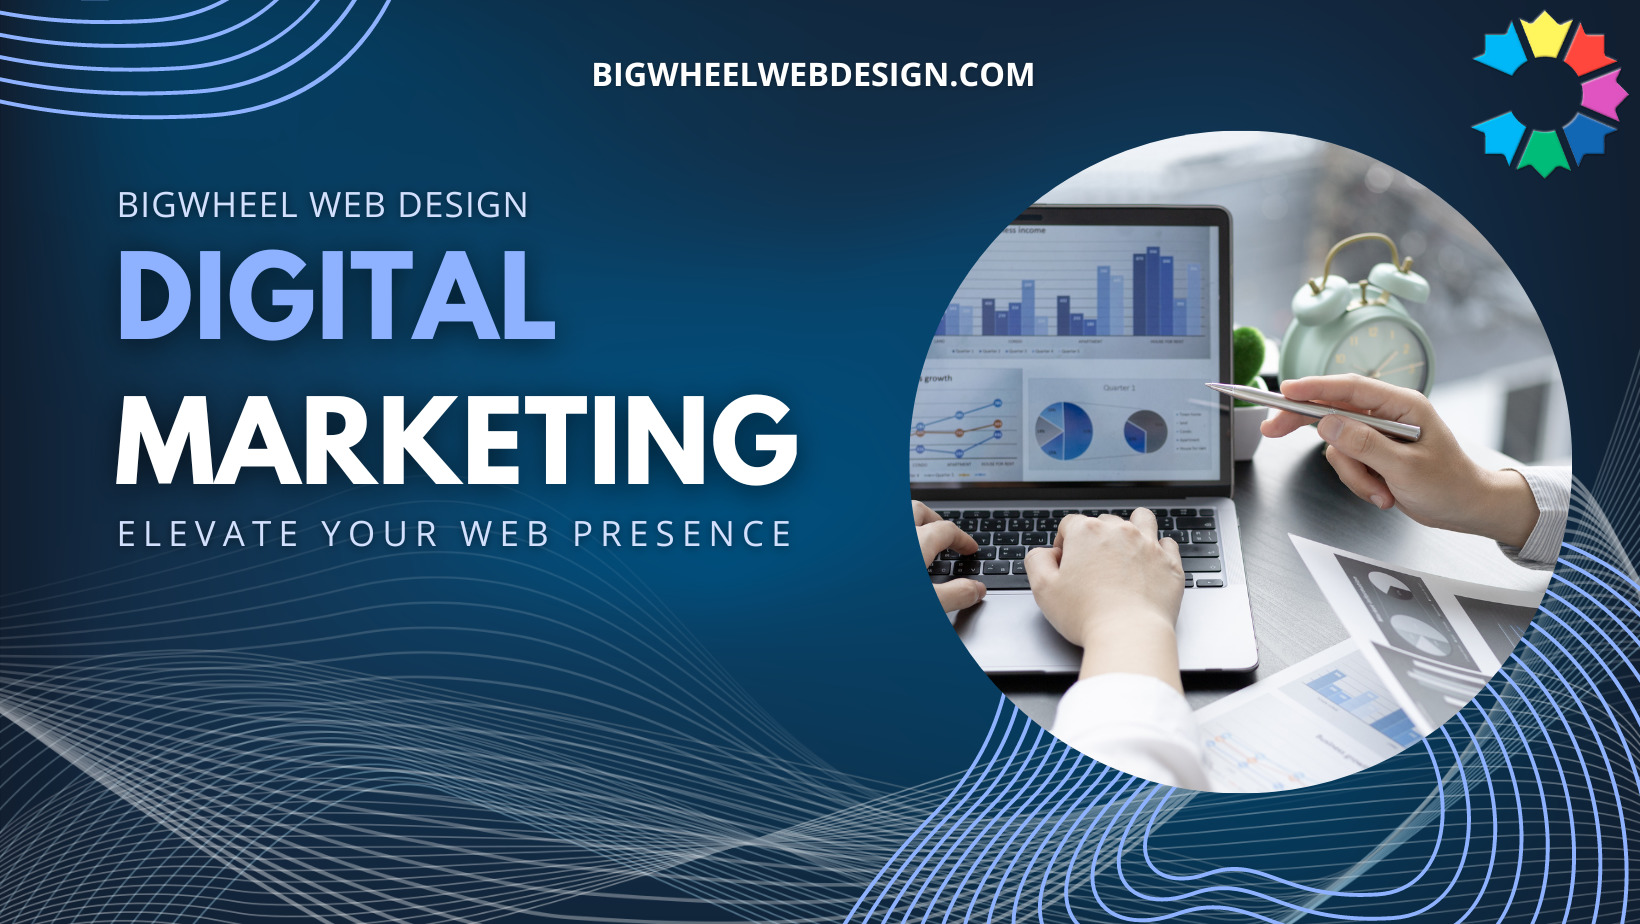 Bigwheel Web Design - Digital Marketing Agency details card.